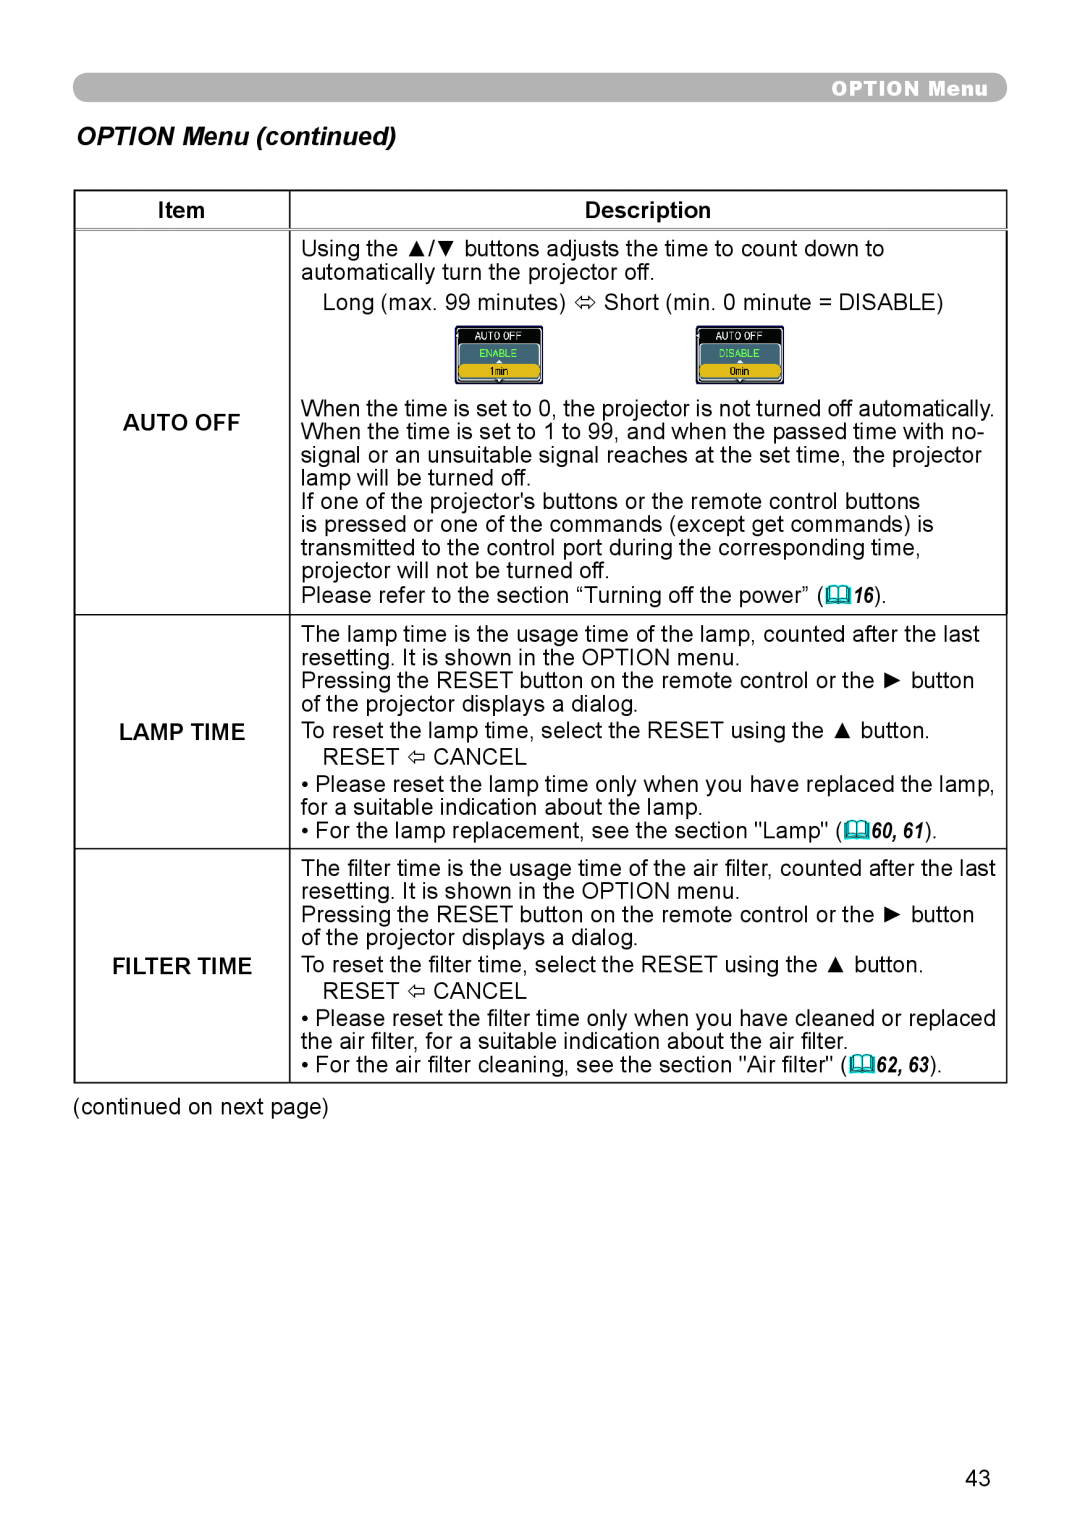 Planar PR9020 user manual OPTION Menu continued, Description, Auto Off, Lamp Time, Filter Time 